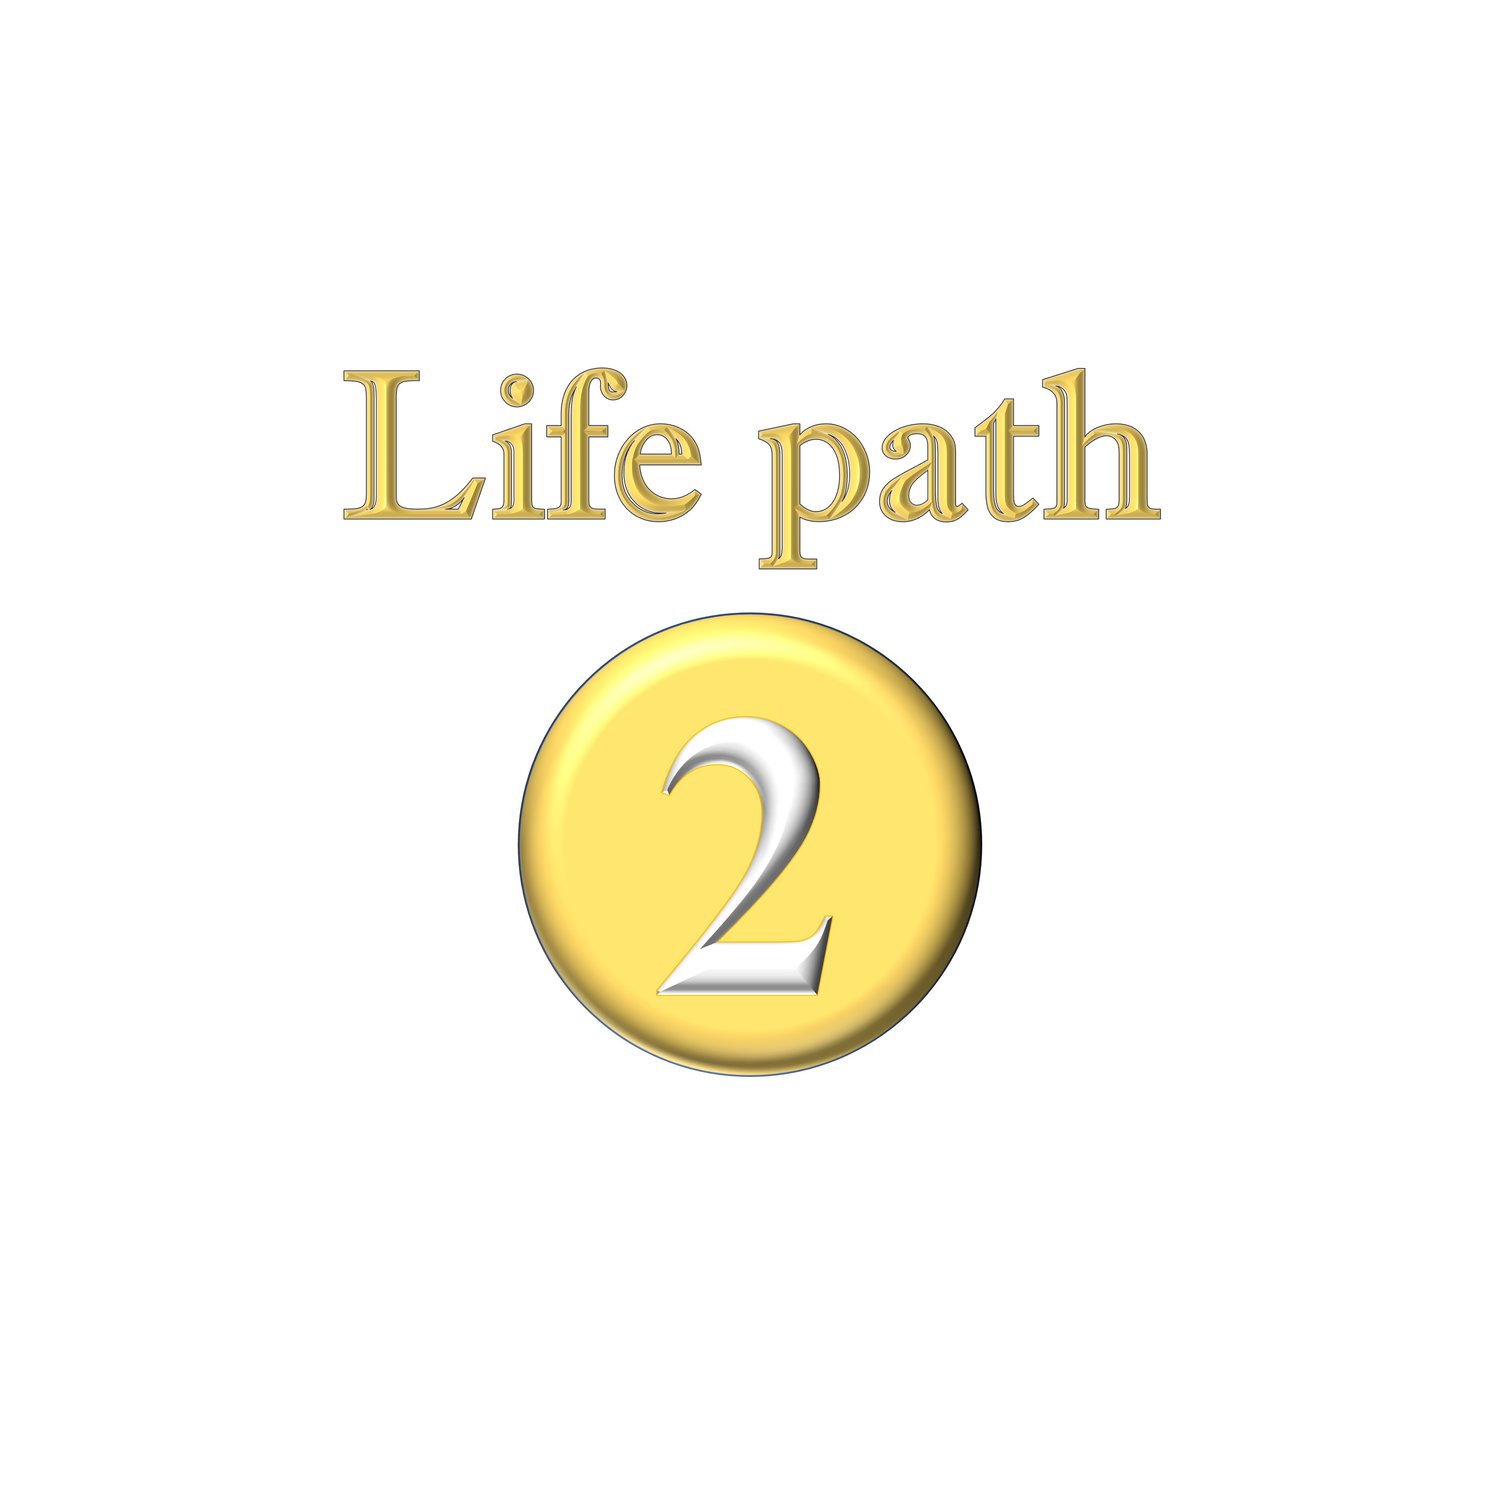 Life path 2